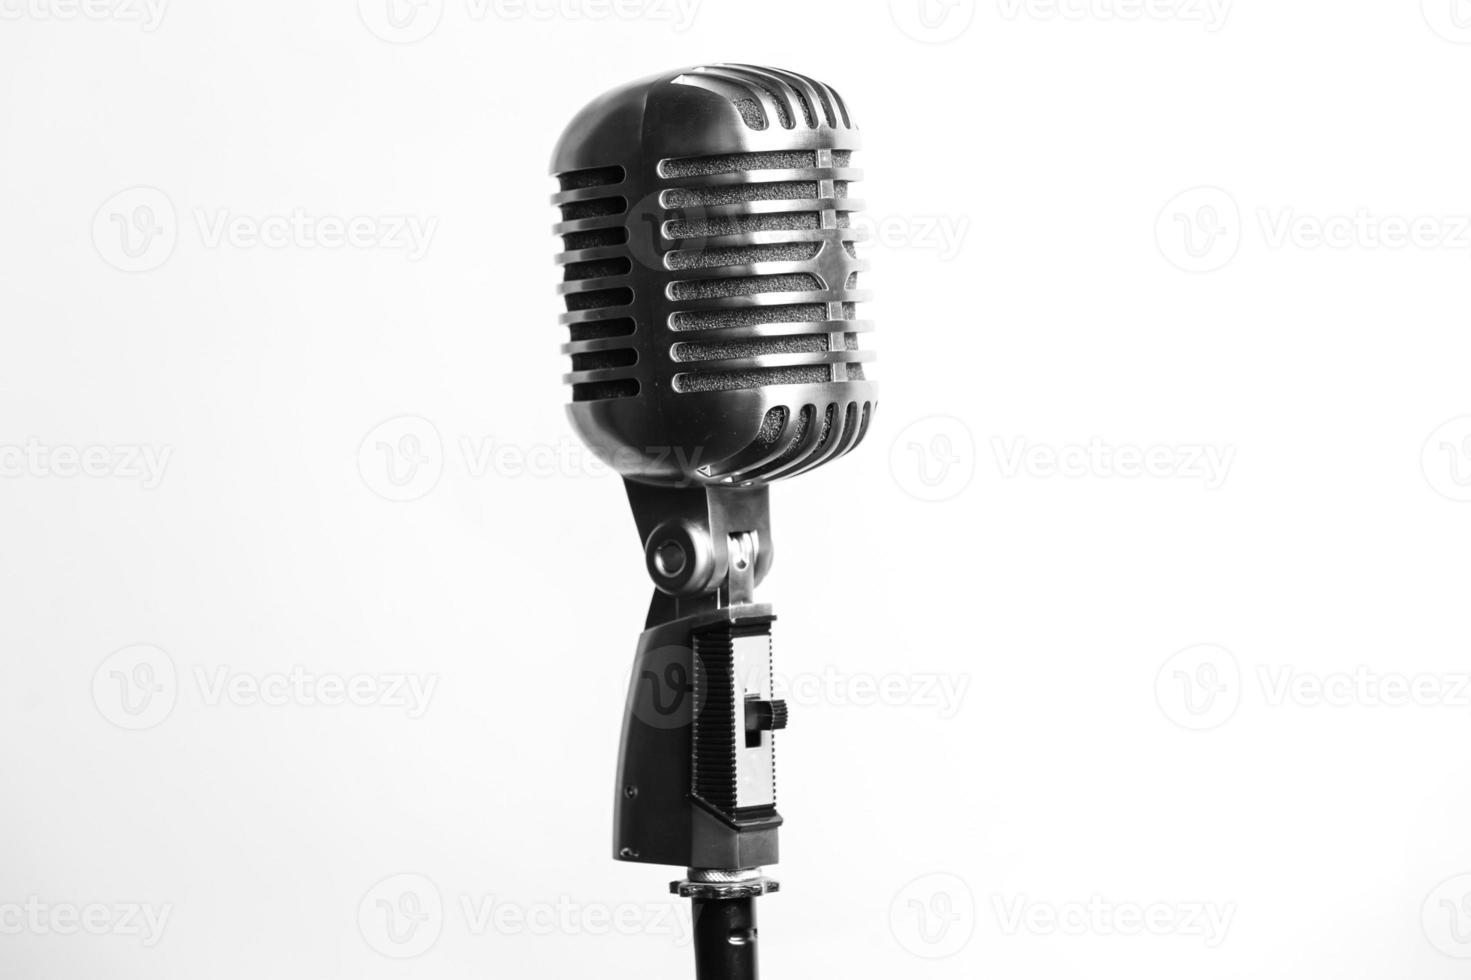 microfone retrô isolado no fundo branco foto